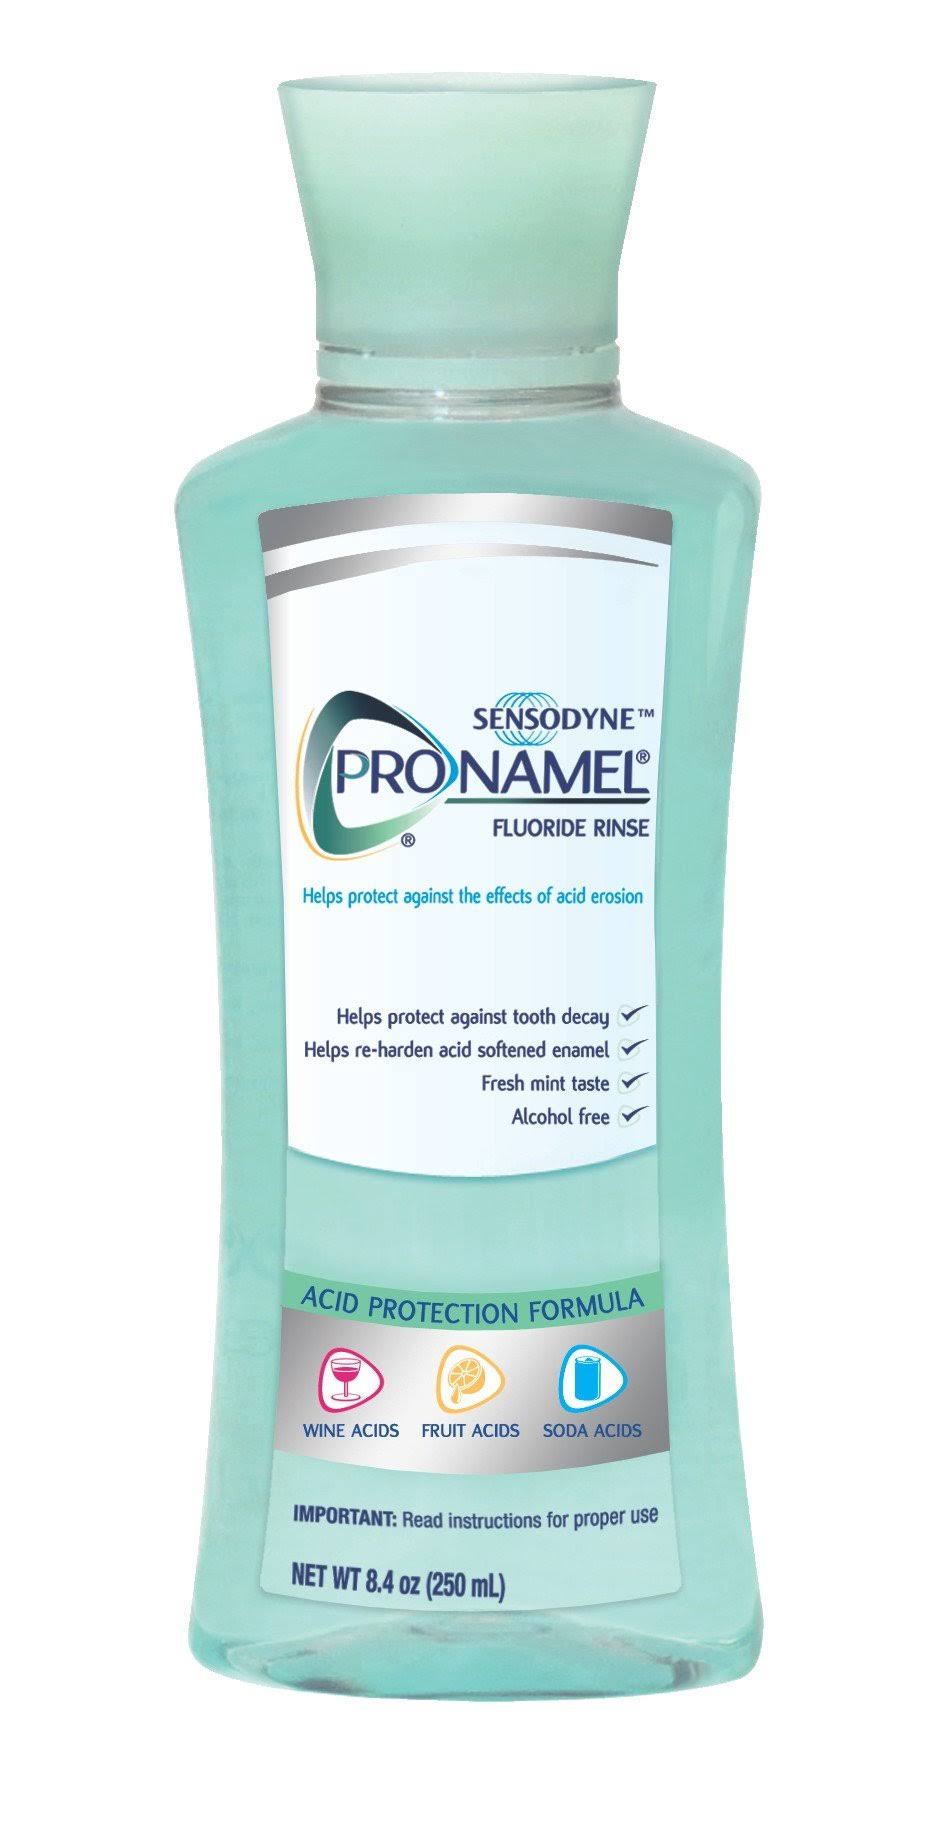 Sensodyne Pronamel Enamel Care Daily Mouthwash - 250ml